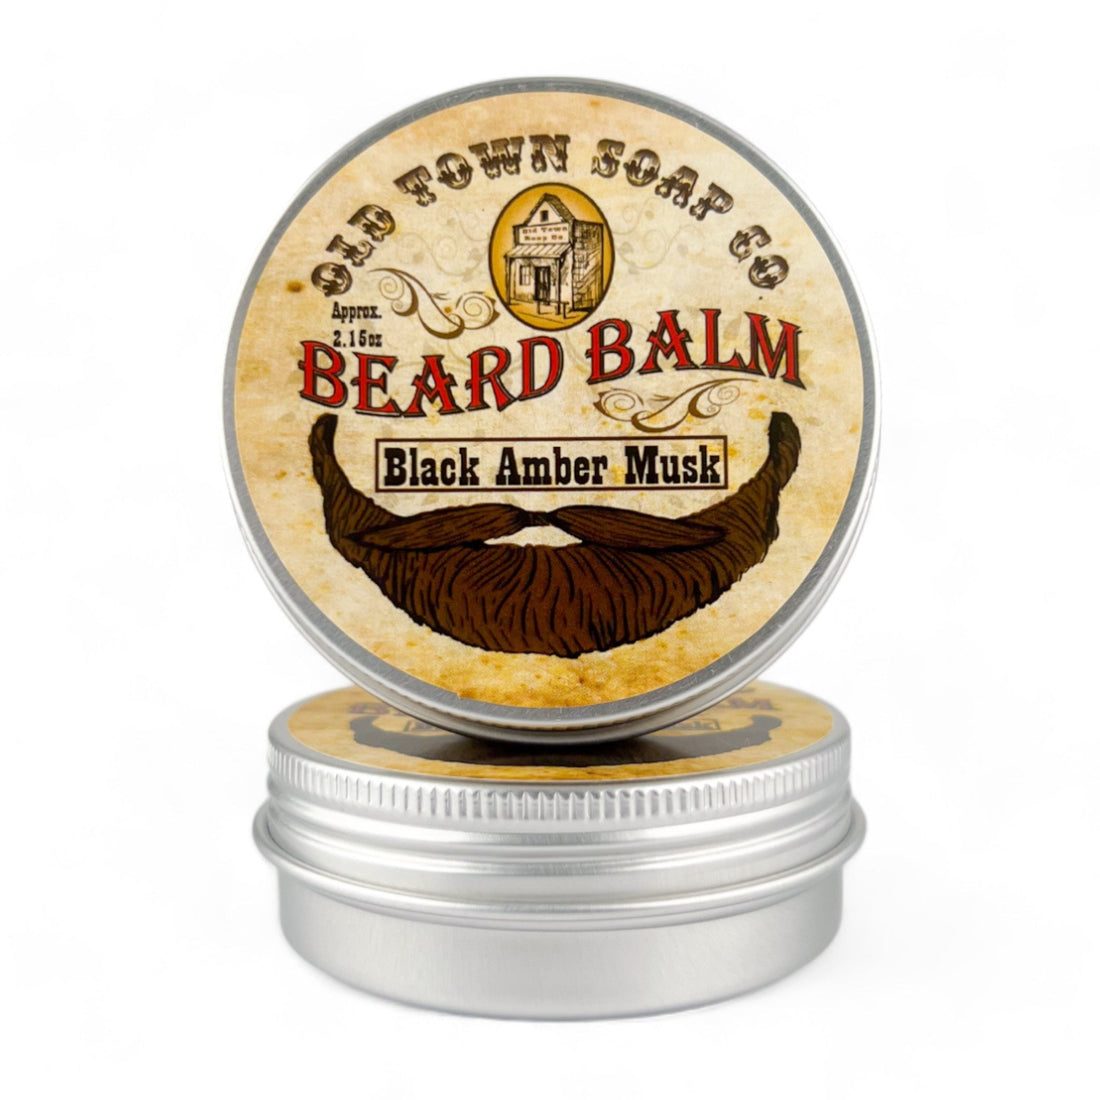 Black Amber Musk Beard Balm - Old Town Soap Co.